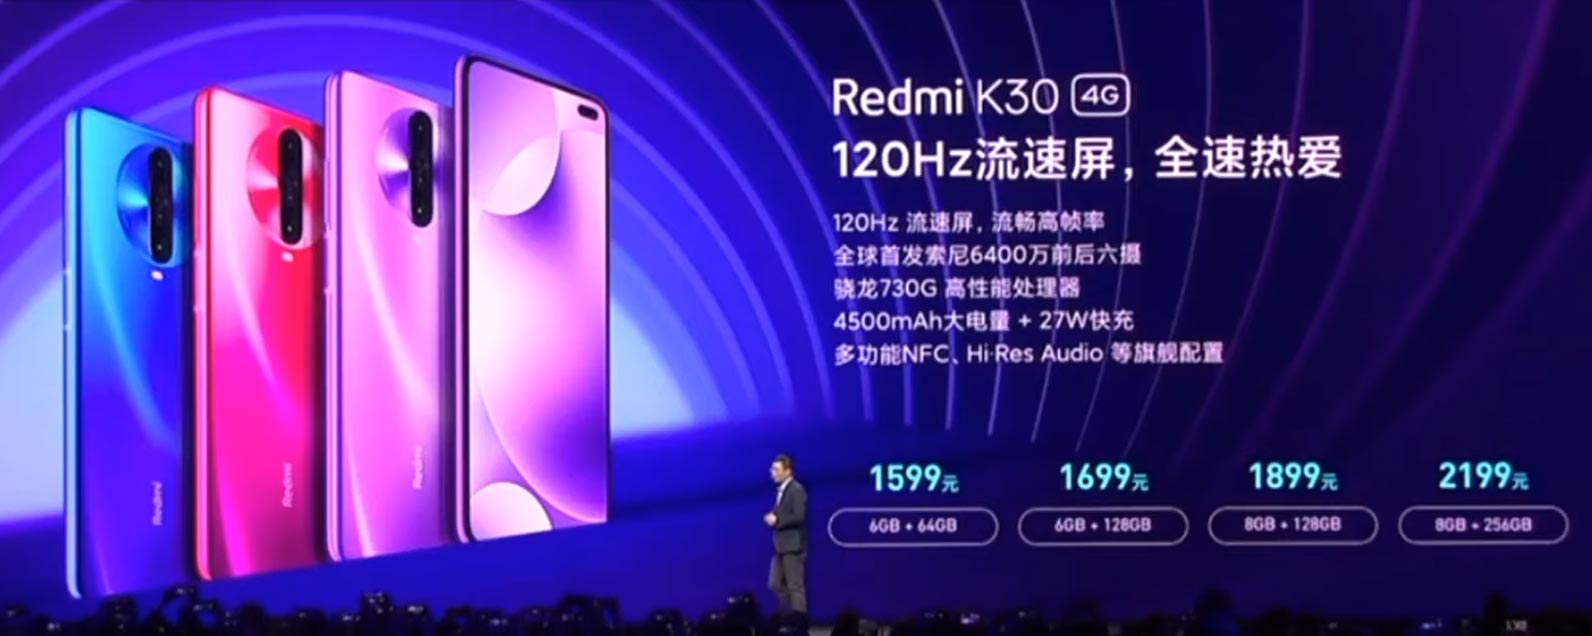 Redmi K30 4G Variants Price